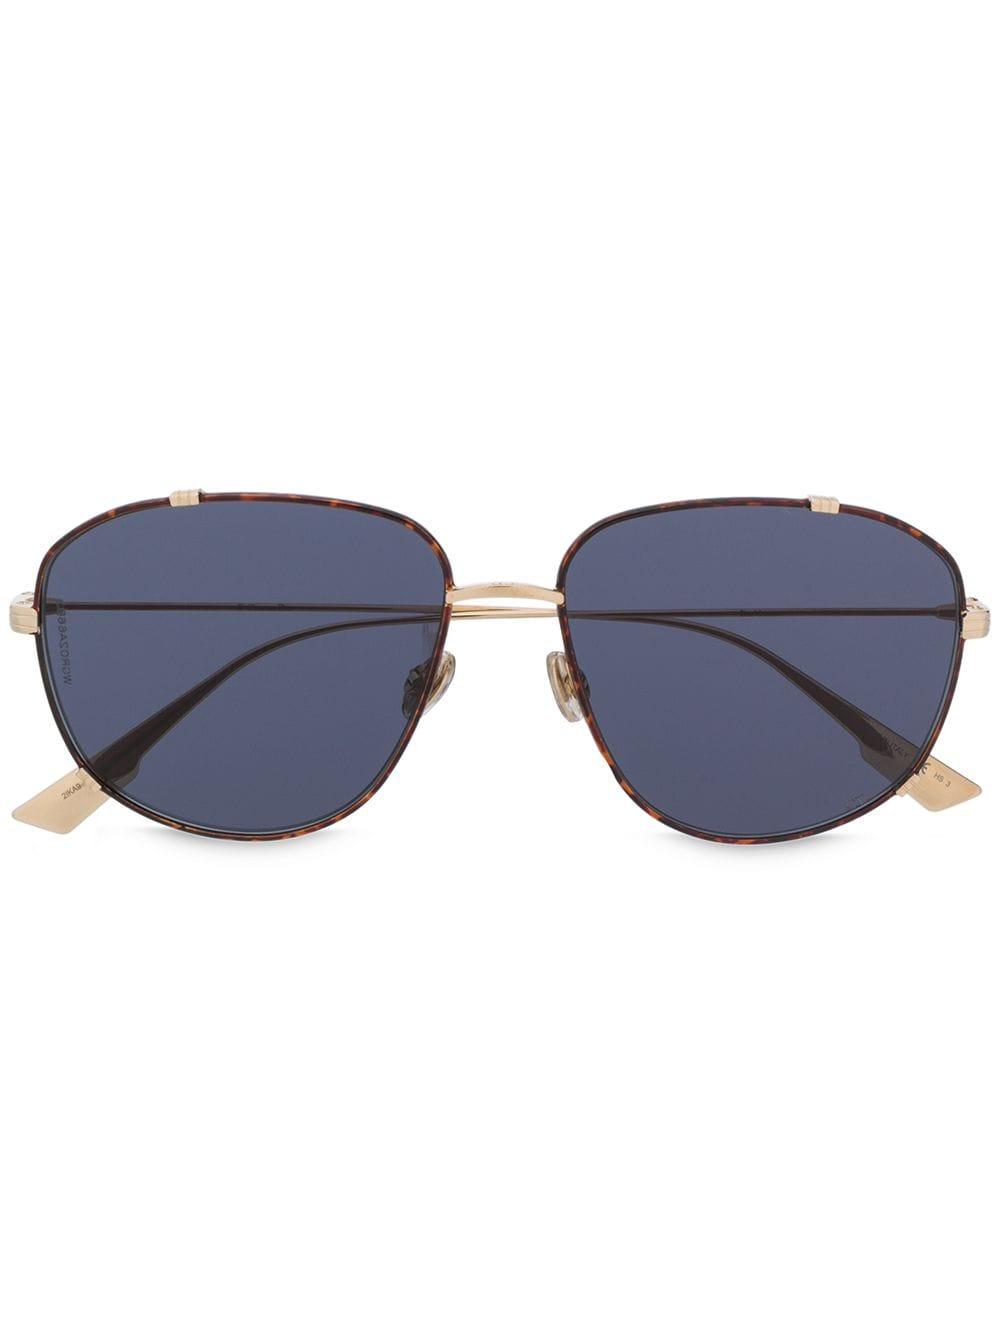 Dior Monsieur 3 Sunglasses in Metallic | Lyst